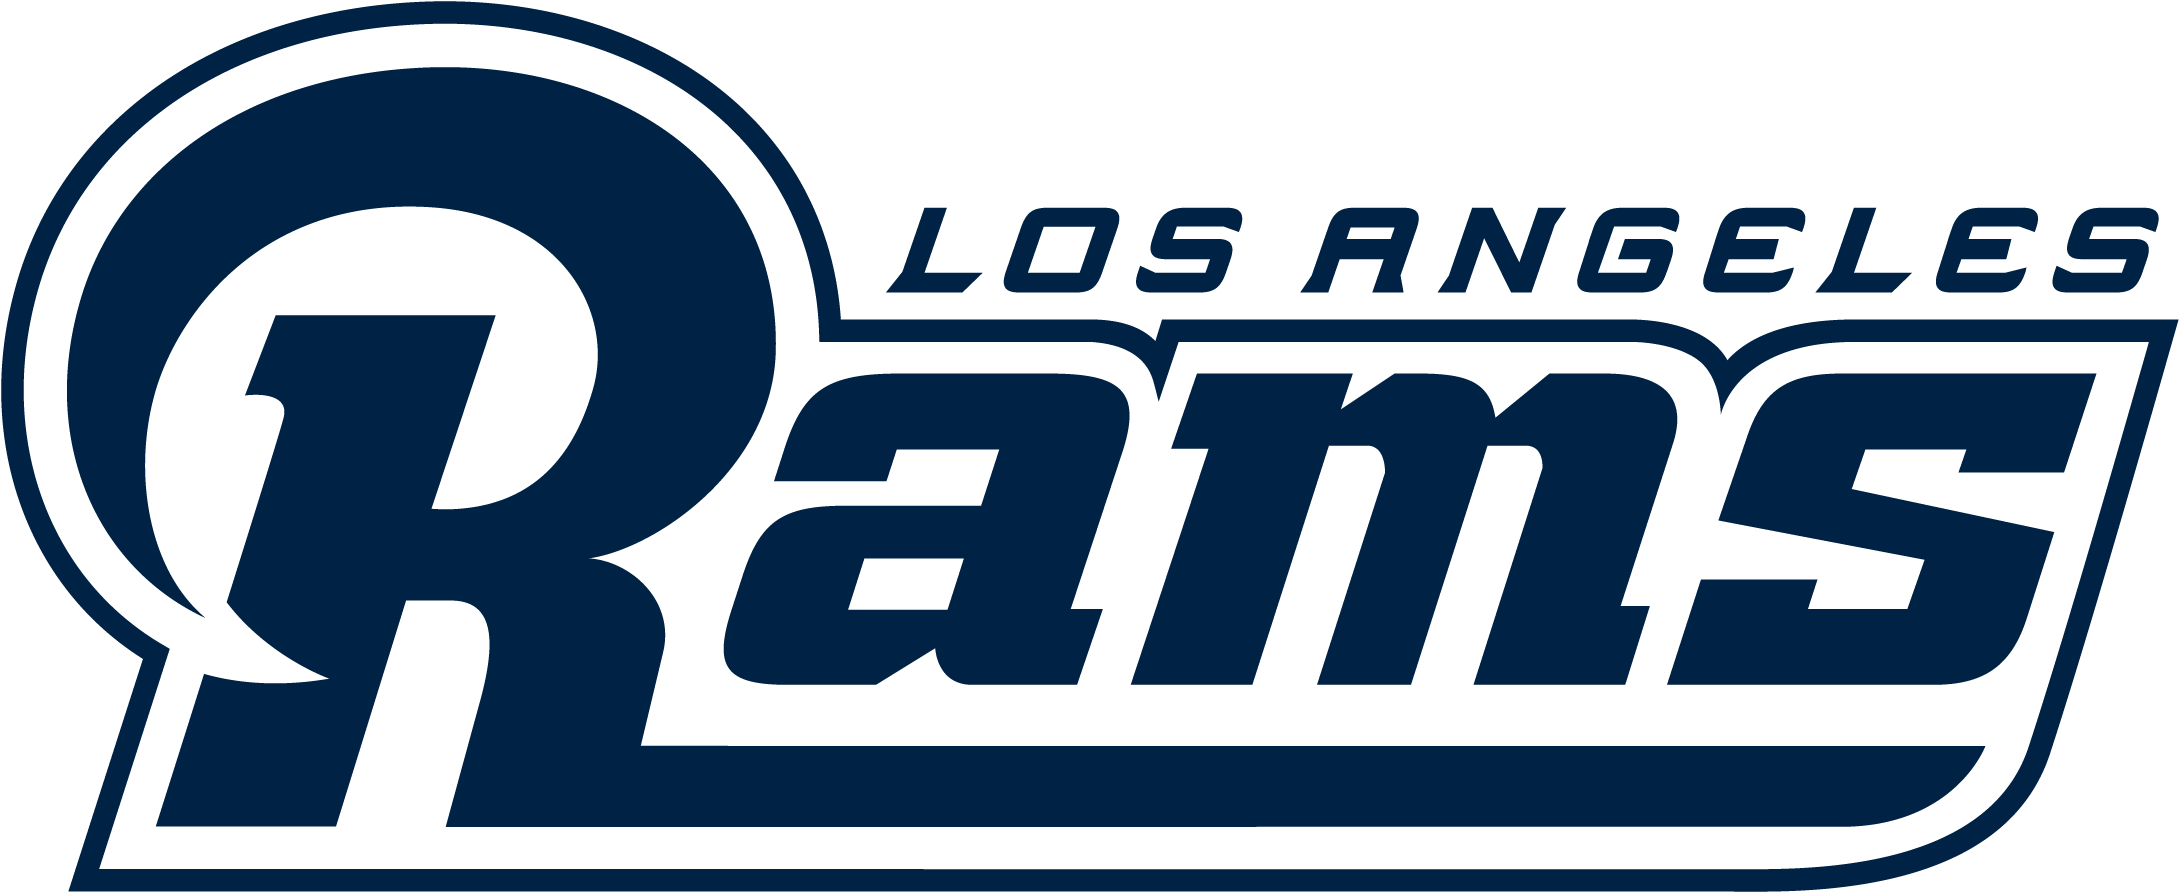 Los Angeles Rams Logo Font - Rams Nfc West Champions (2400x1200)